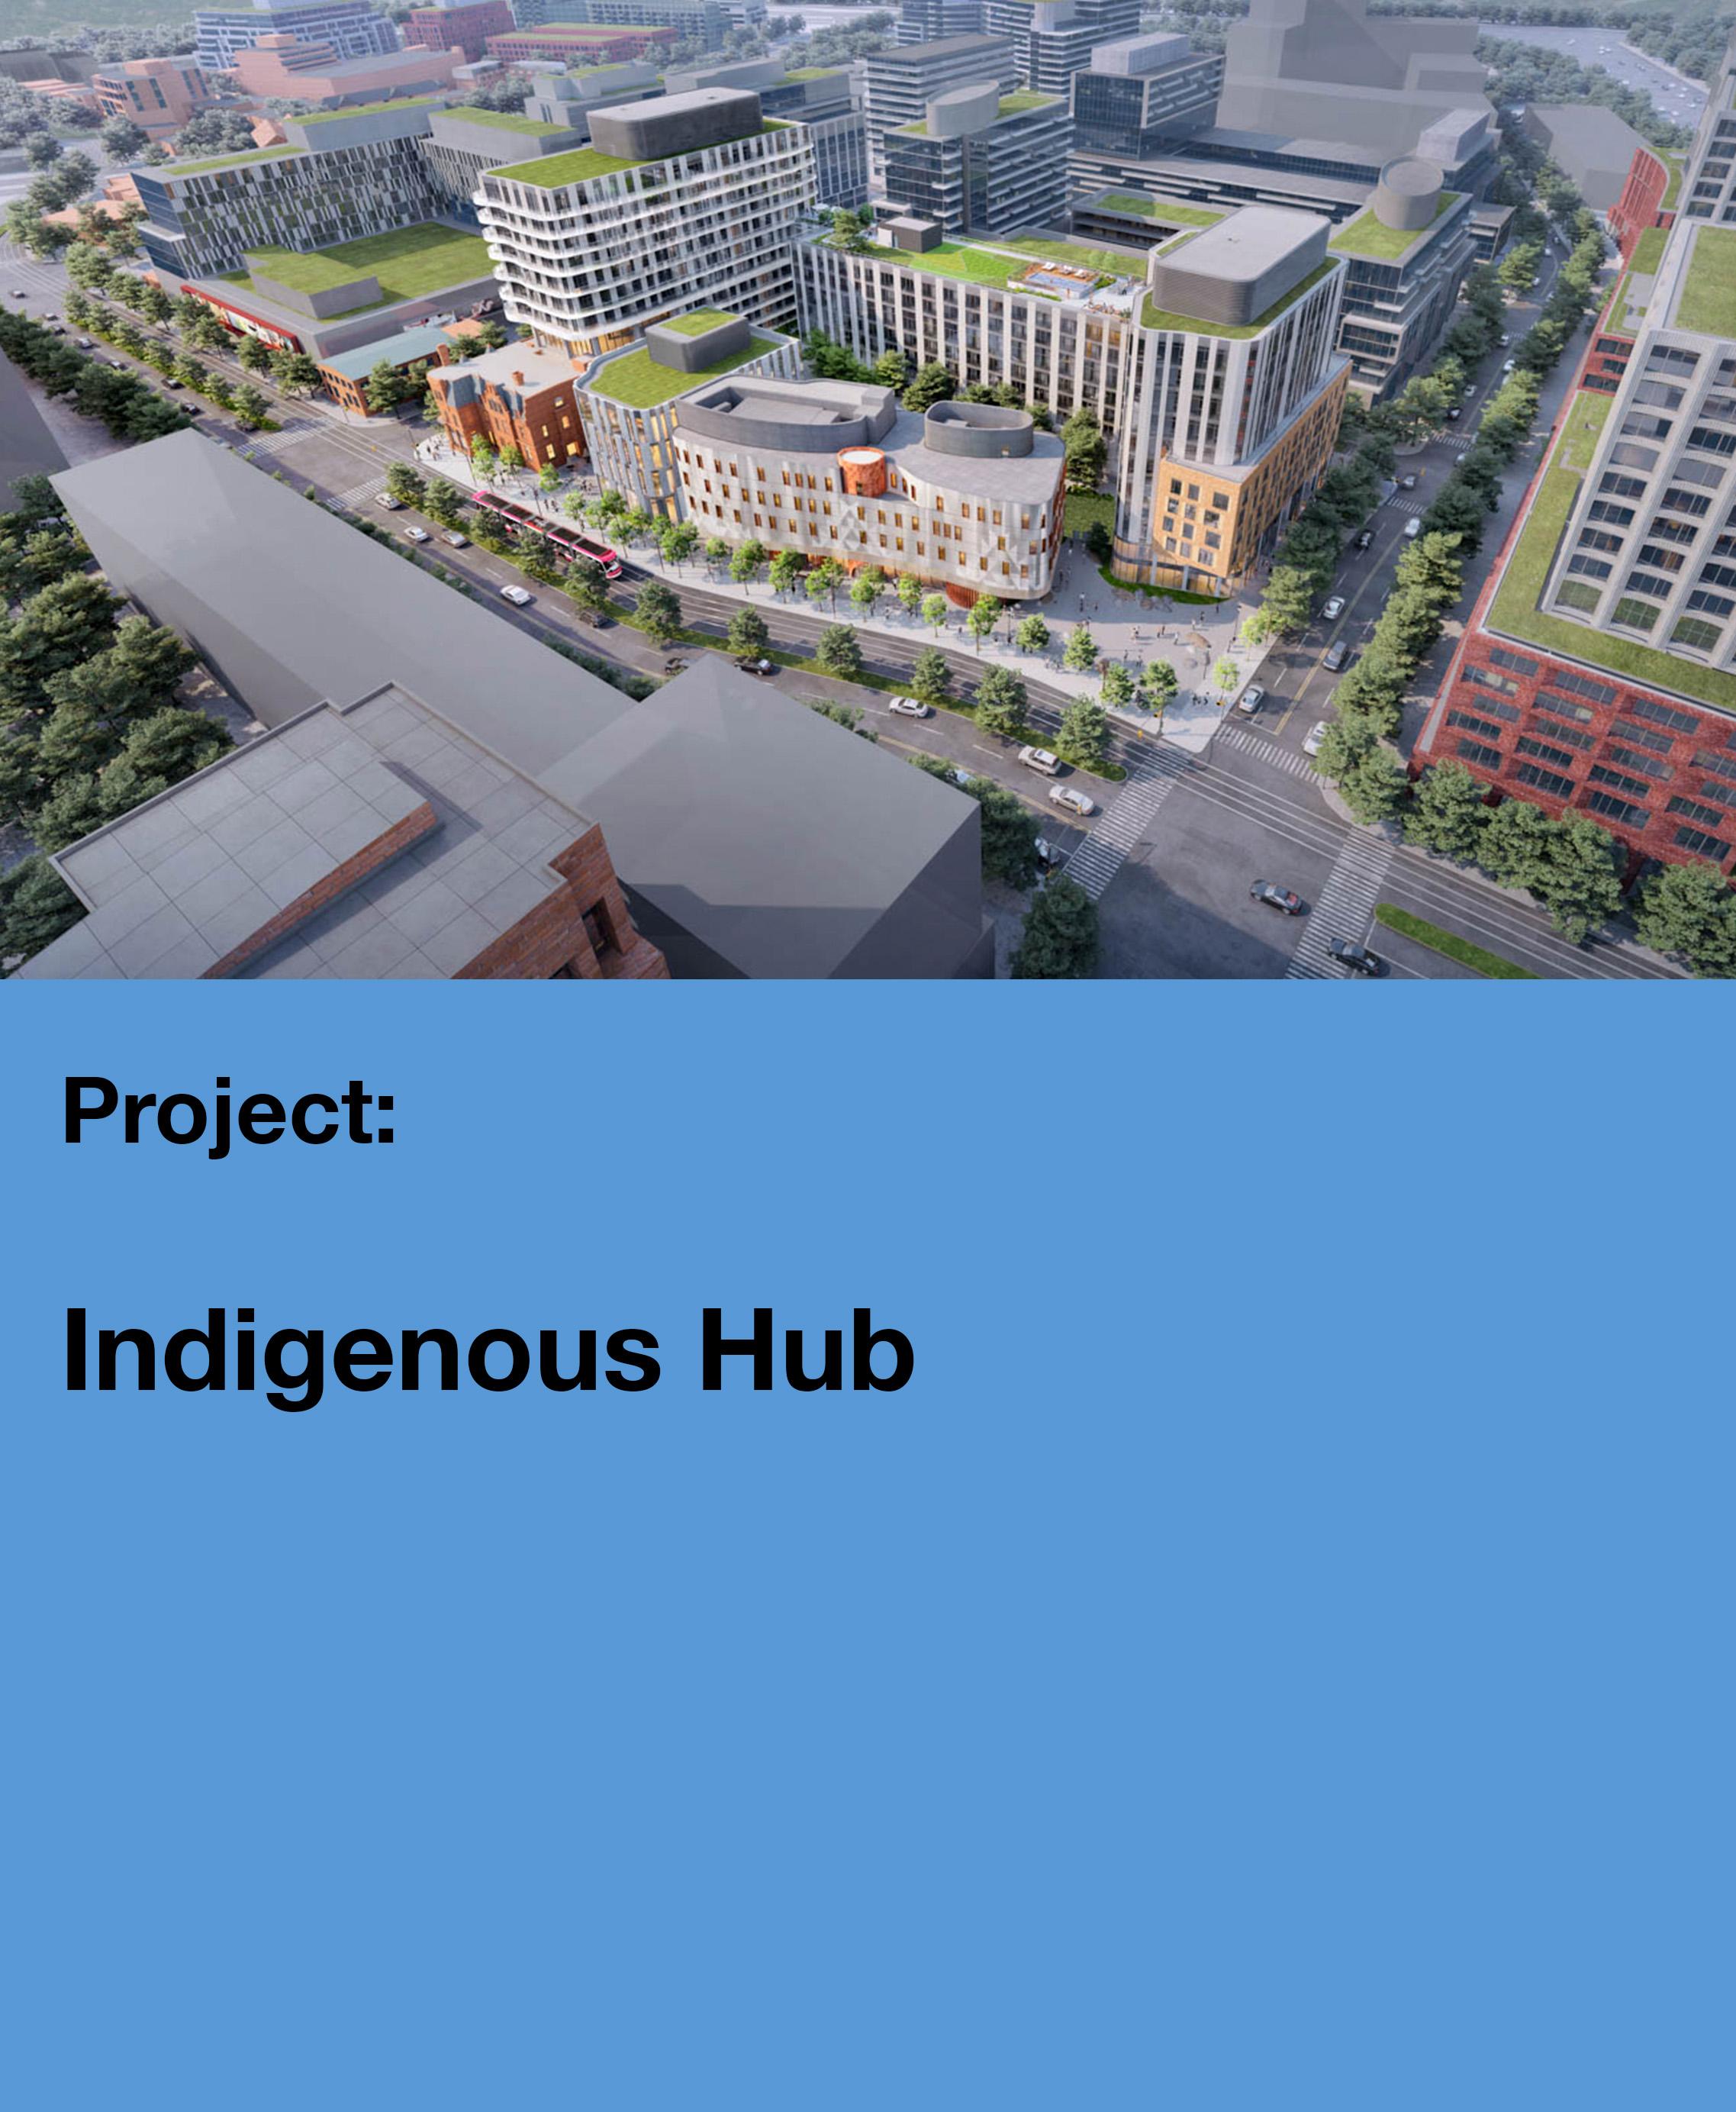 Indigenous Hub